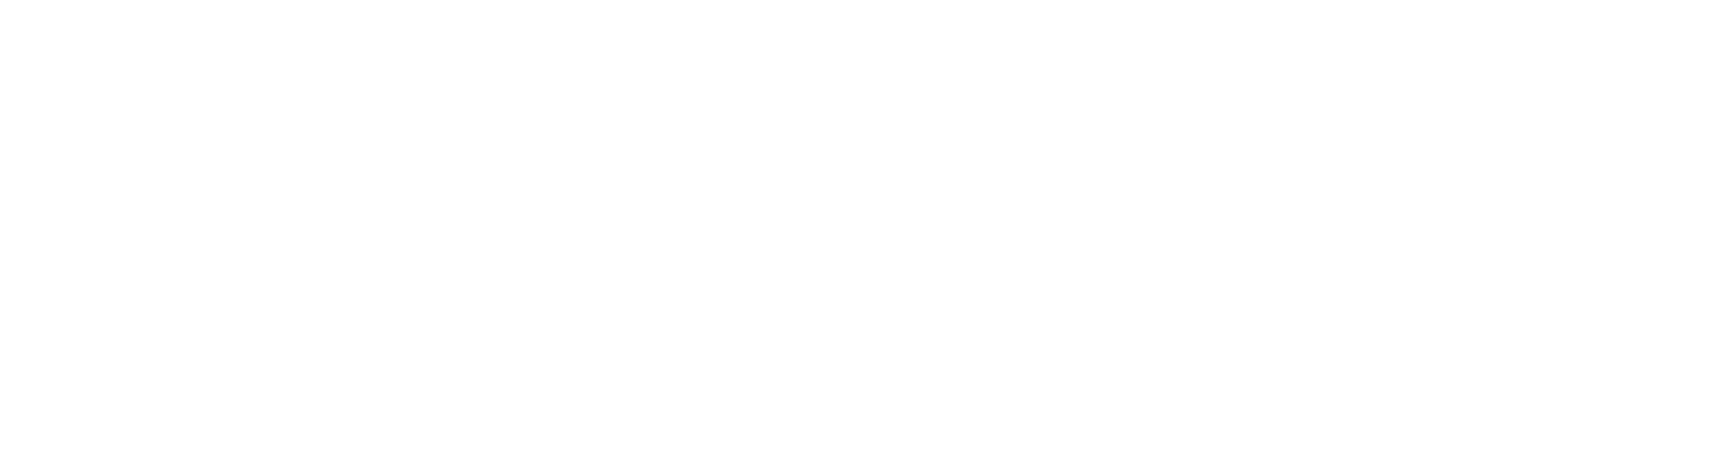 Canada's Podcast Logo